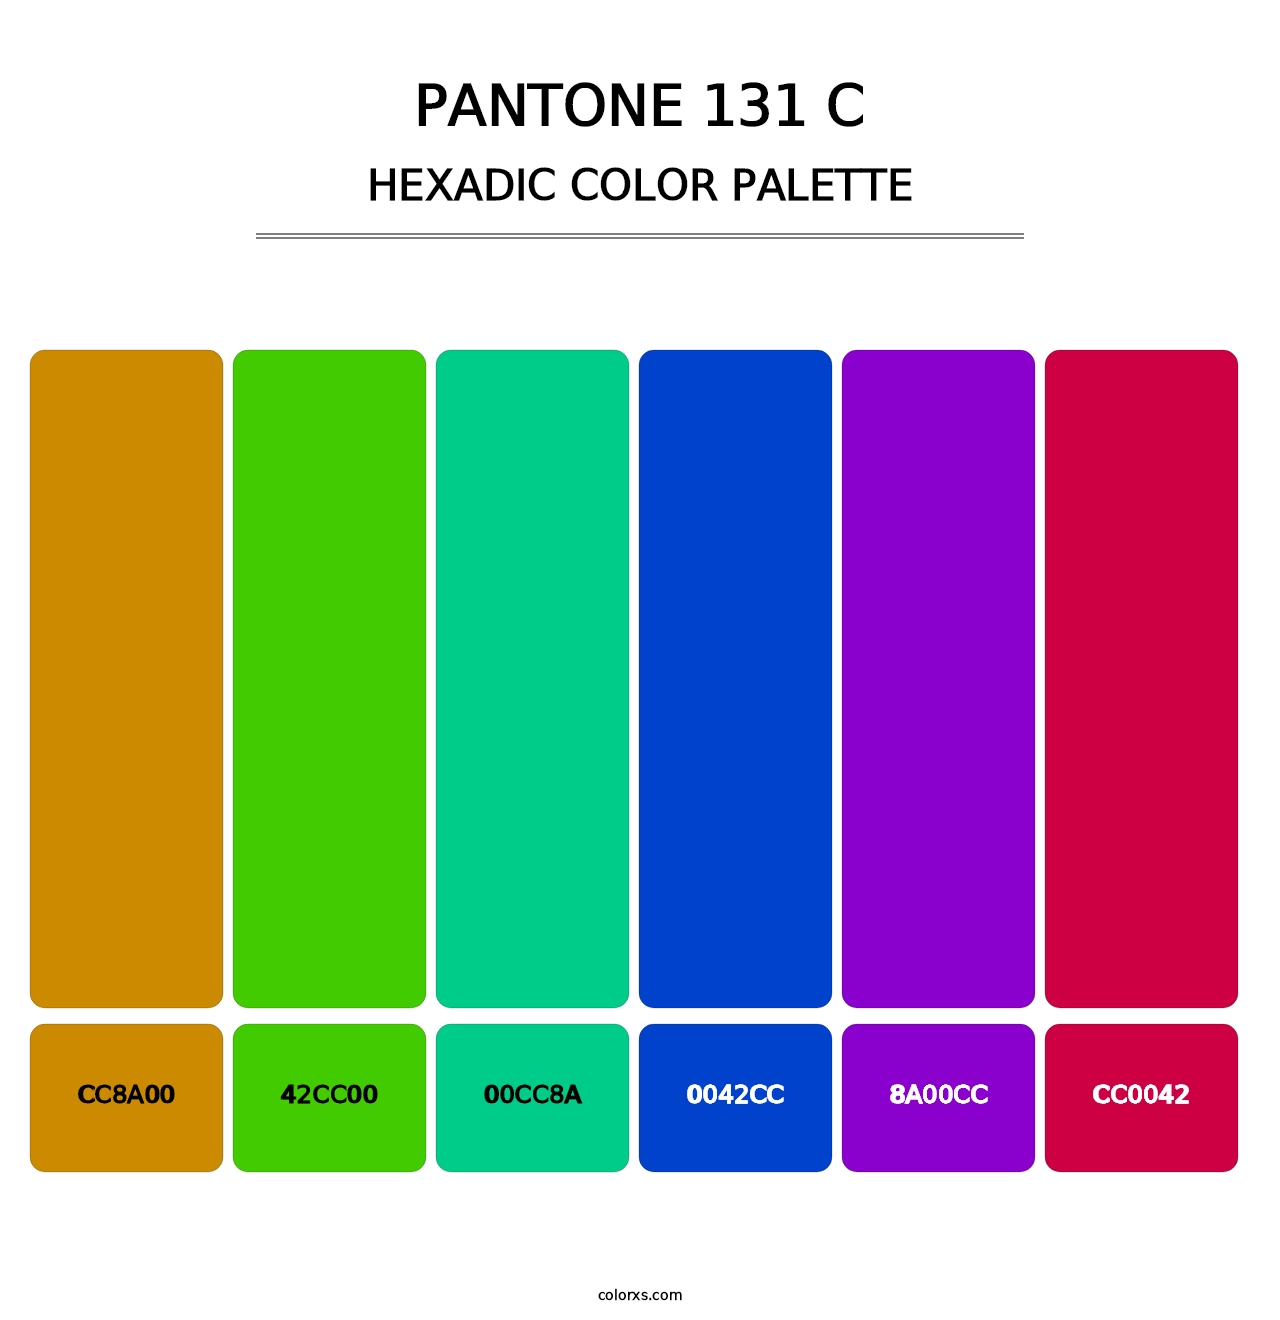 PANTONE 131 C - Hexadic Color Palette